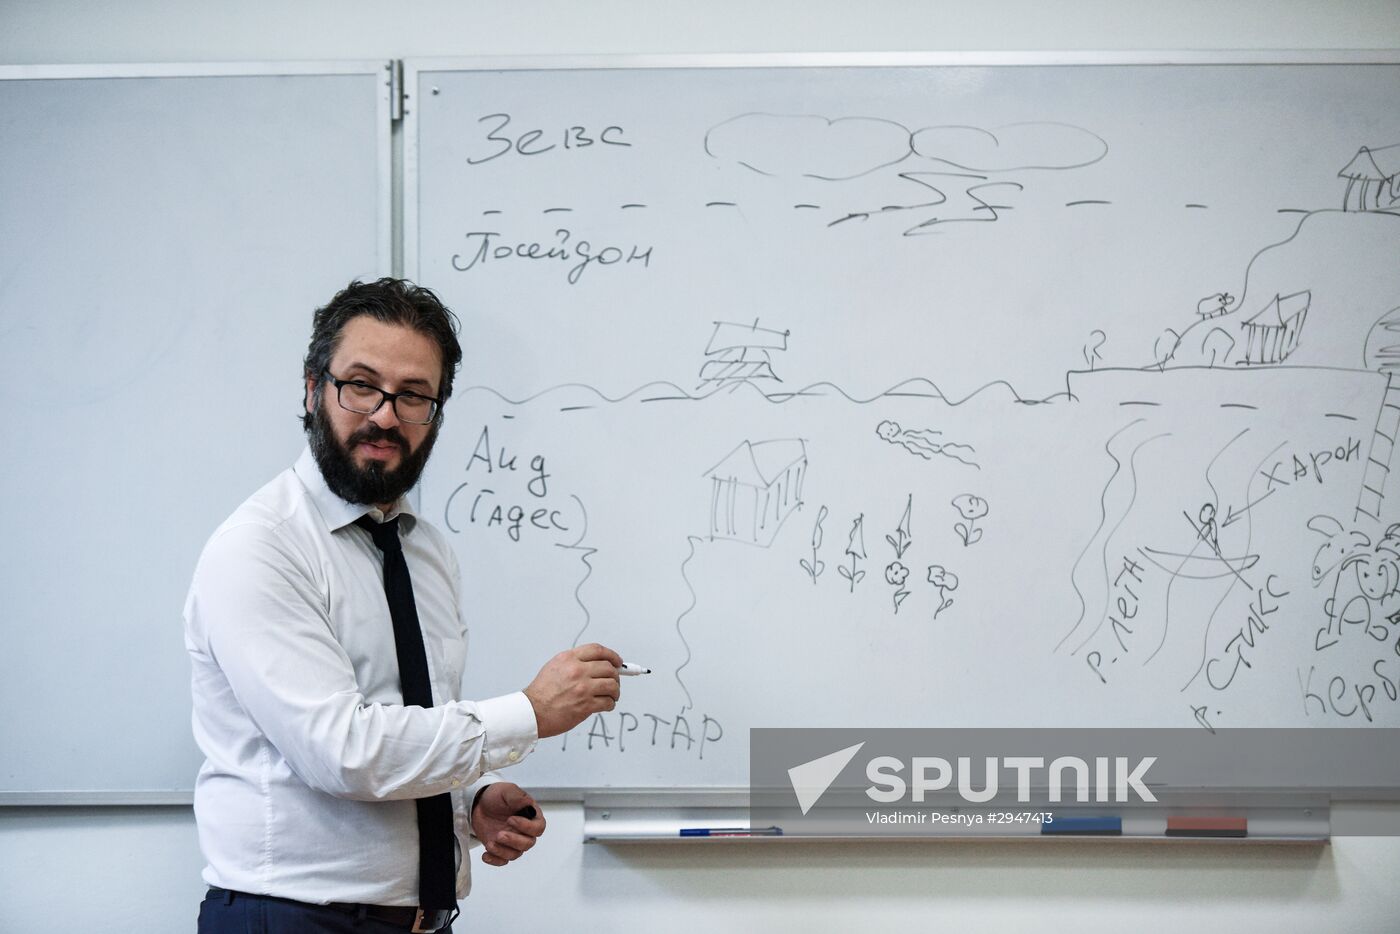 History teacher of the lyceum at Higher School of Economics Sergei Tsibulsky